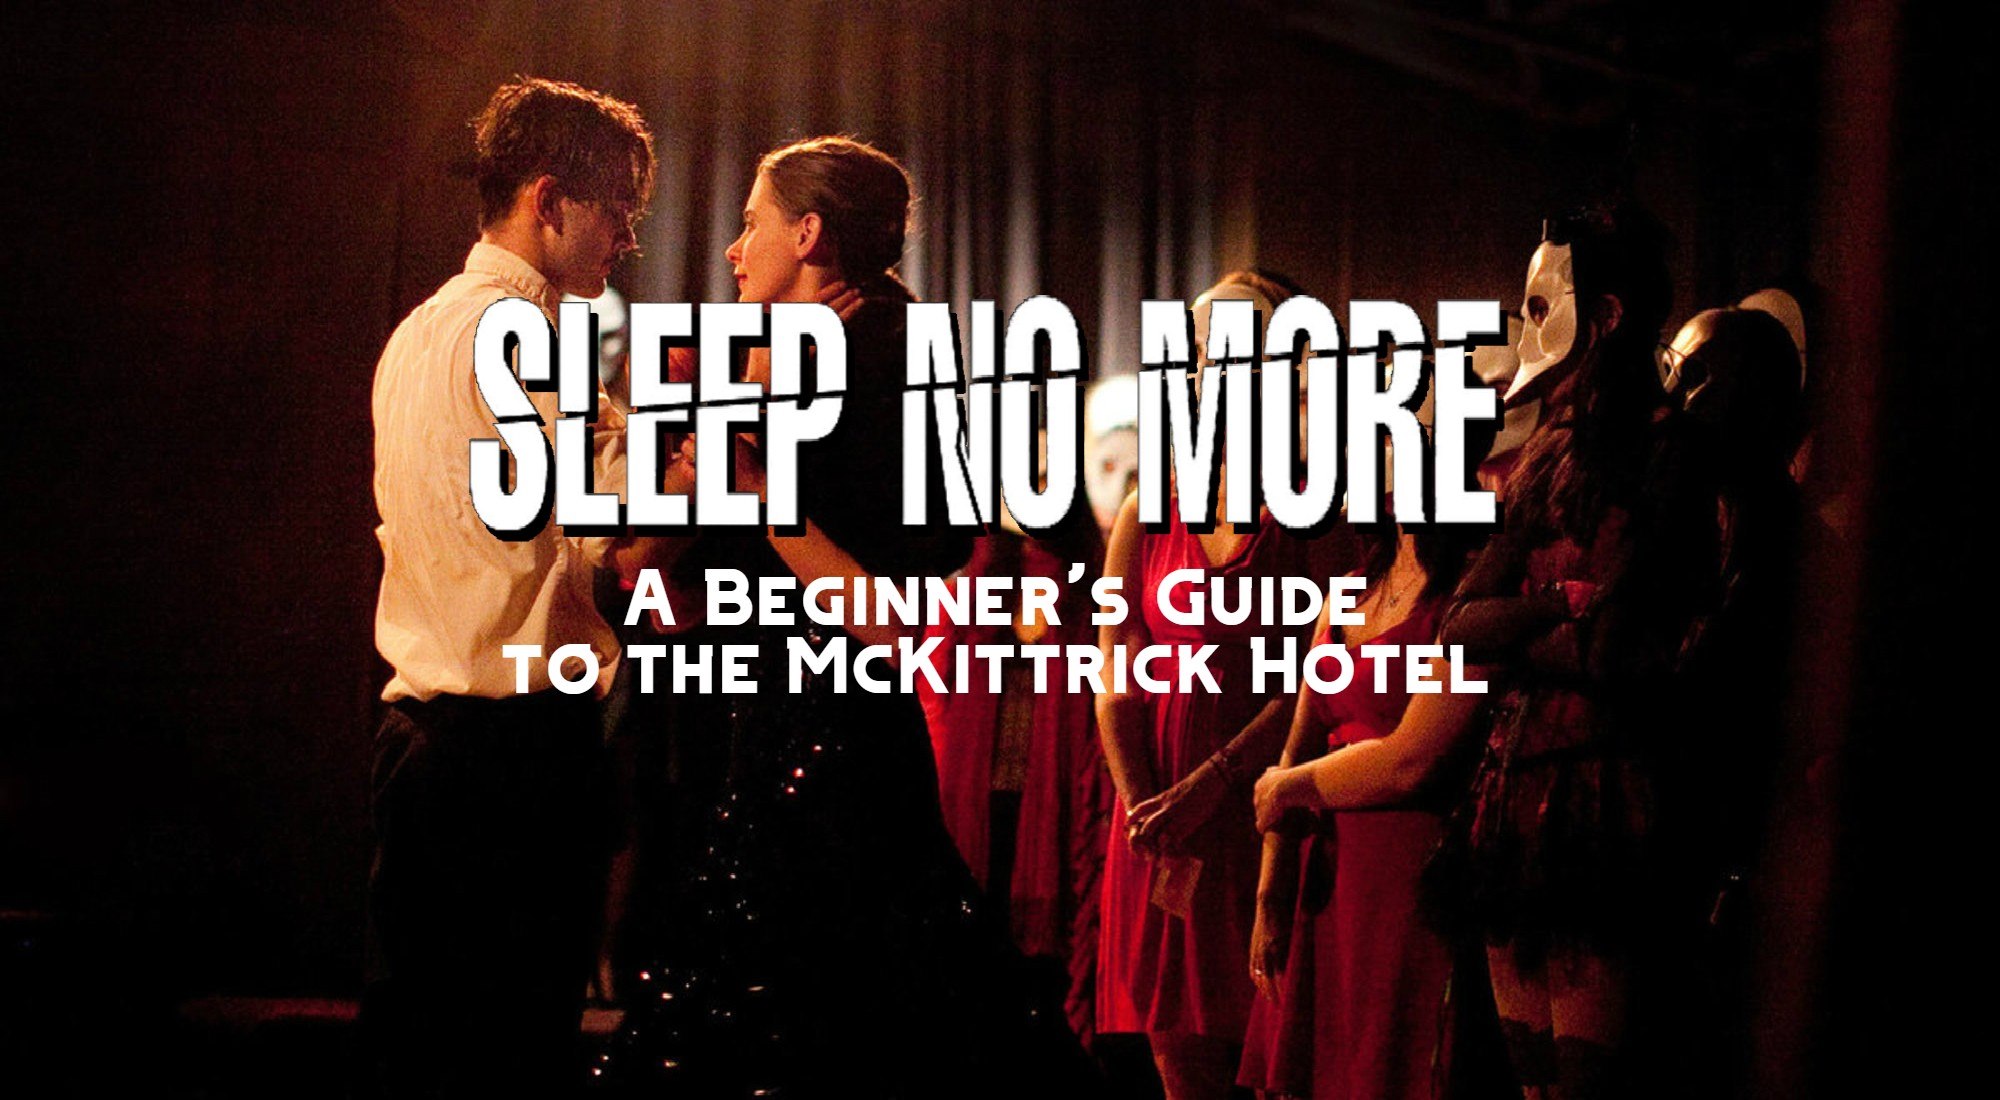 mckittrick hotel sleep no more story